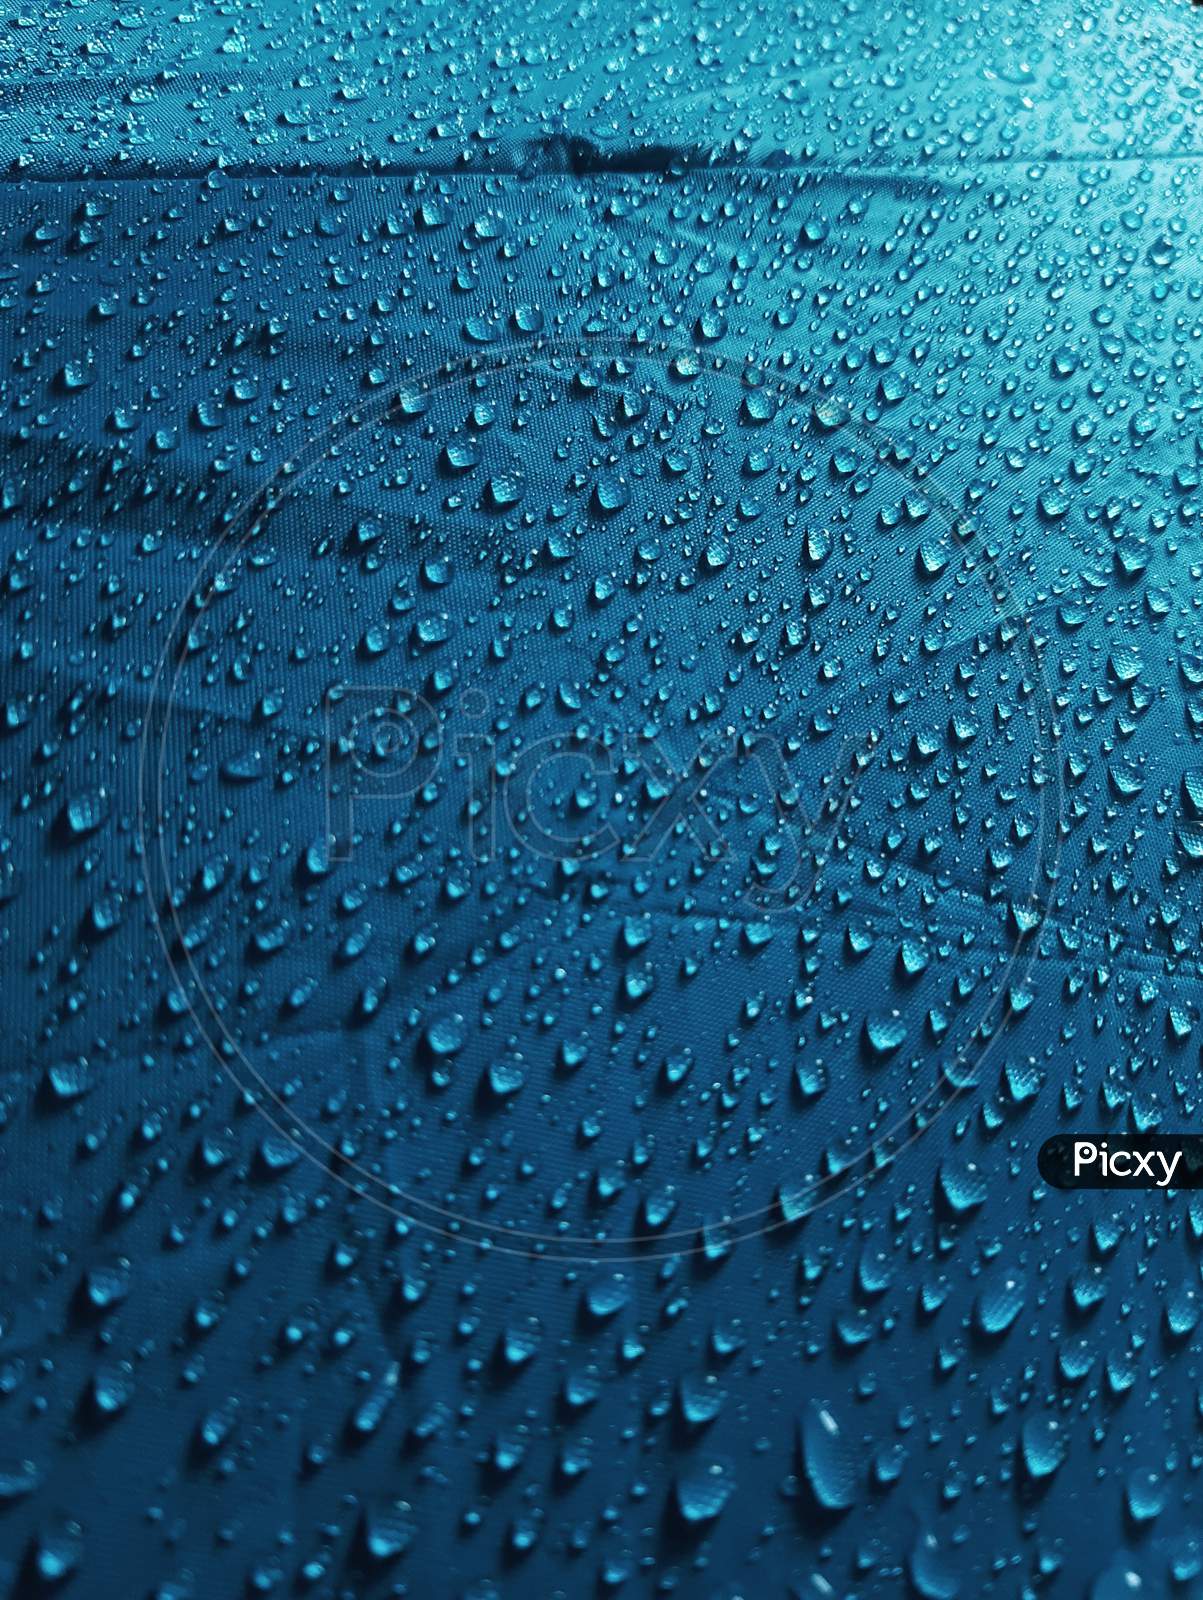 Water droplets on a blue Umbrella- Wallpaper